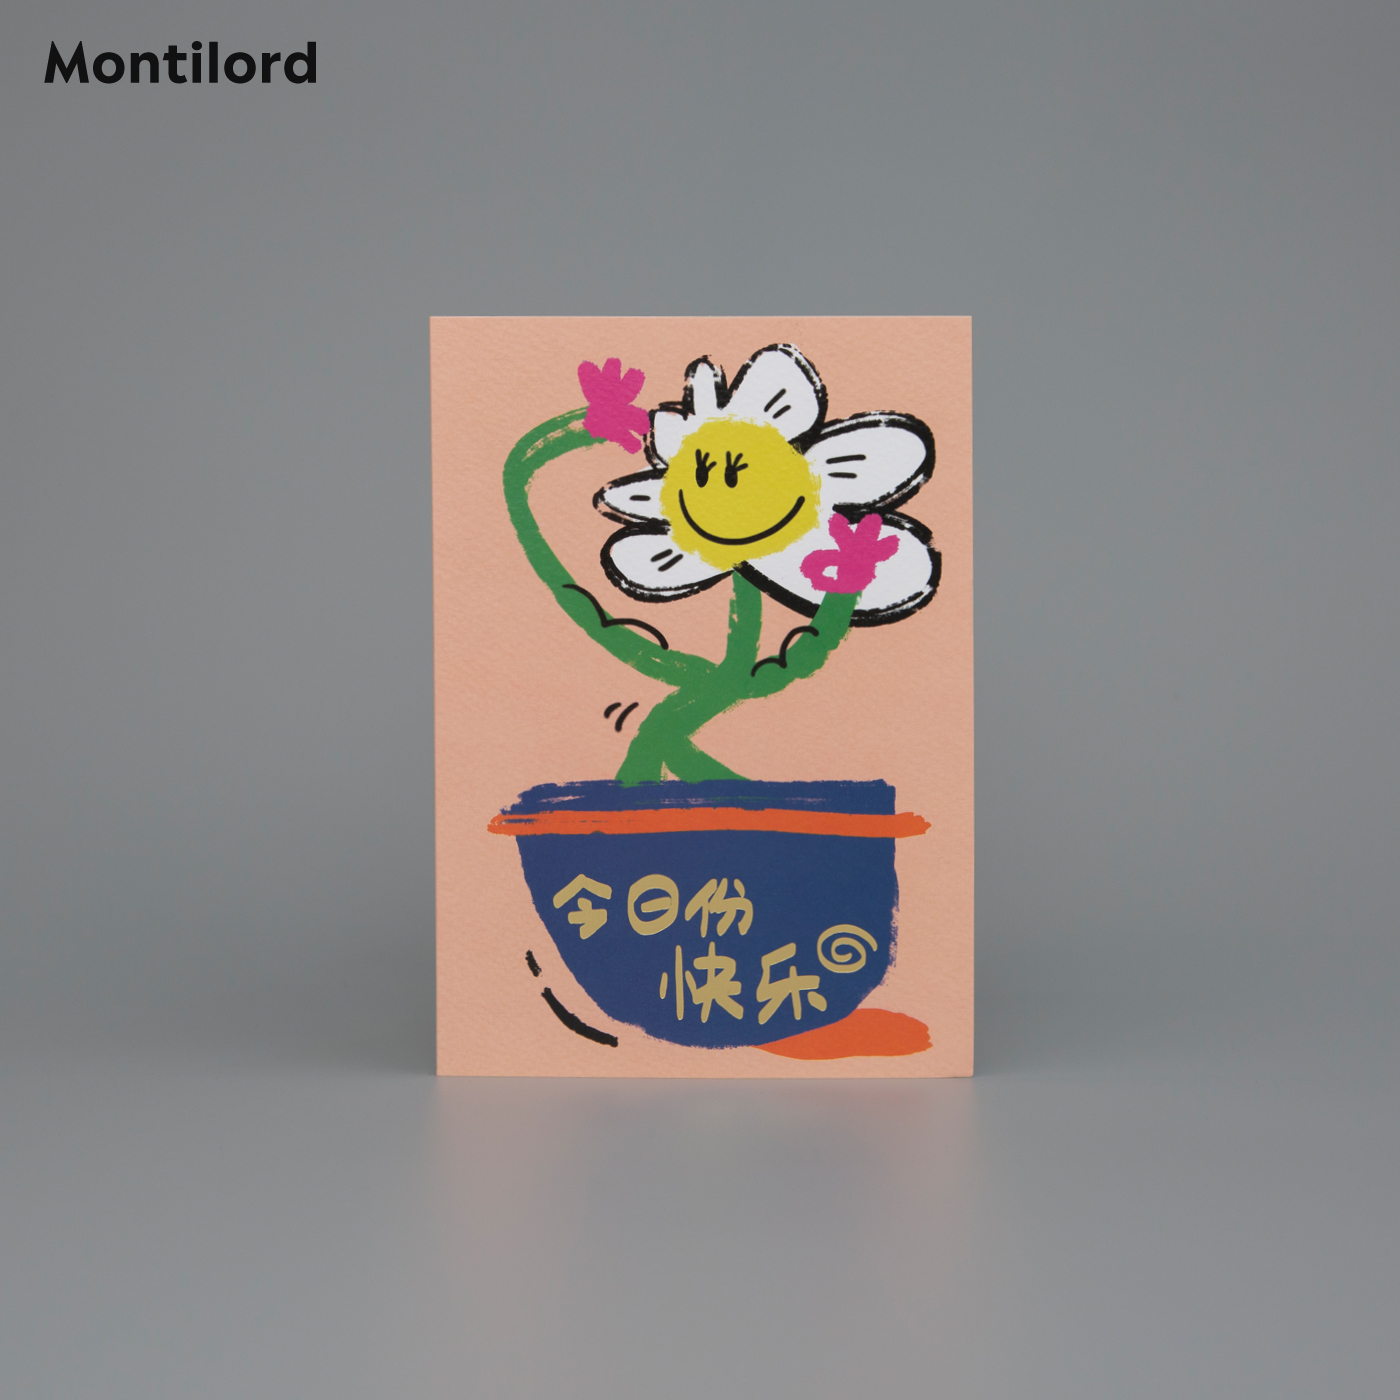 『Montilord』对折贺卡 大号 带信封 快乐太阳花 节日中秋情人圣诞礼品心意周年纪念对象生日满岁年